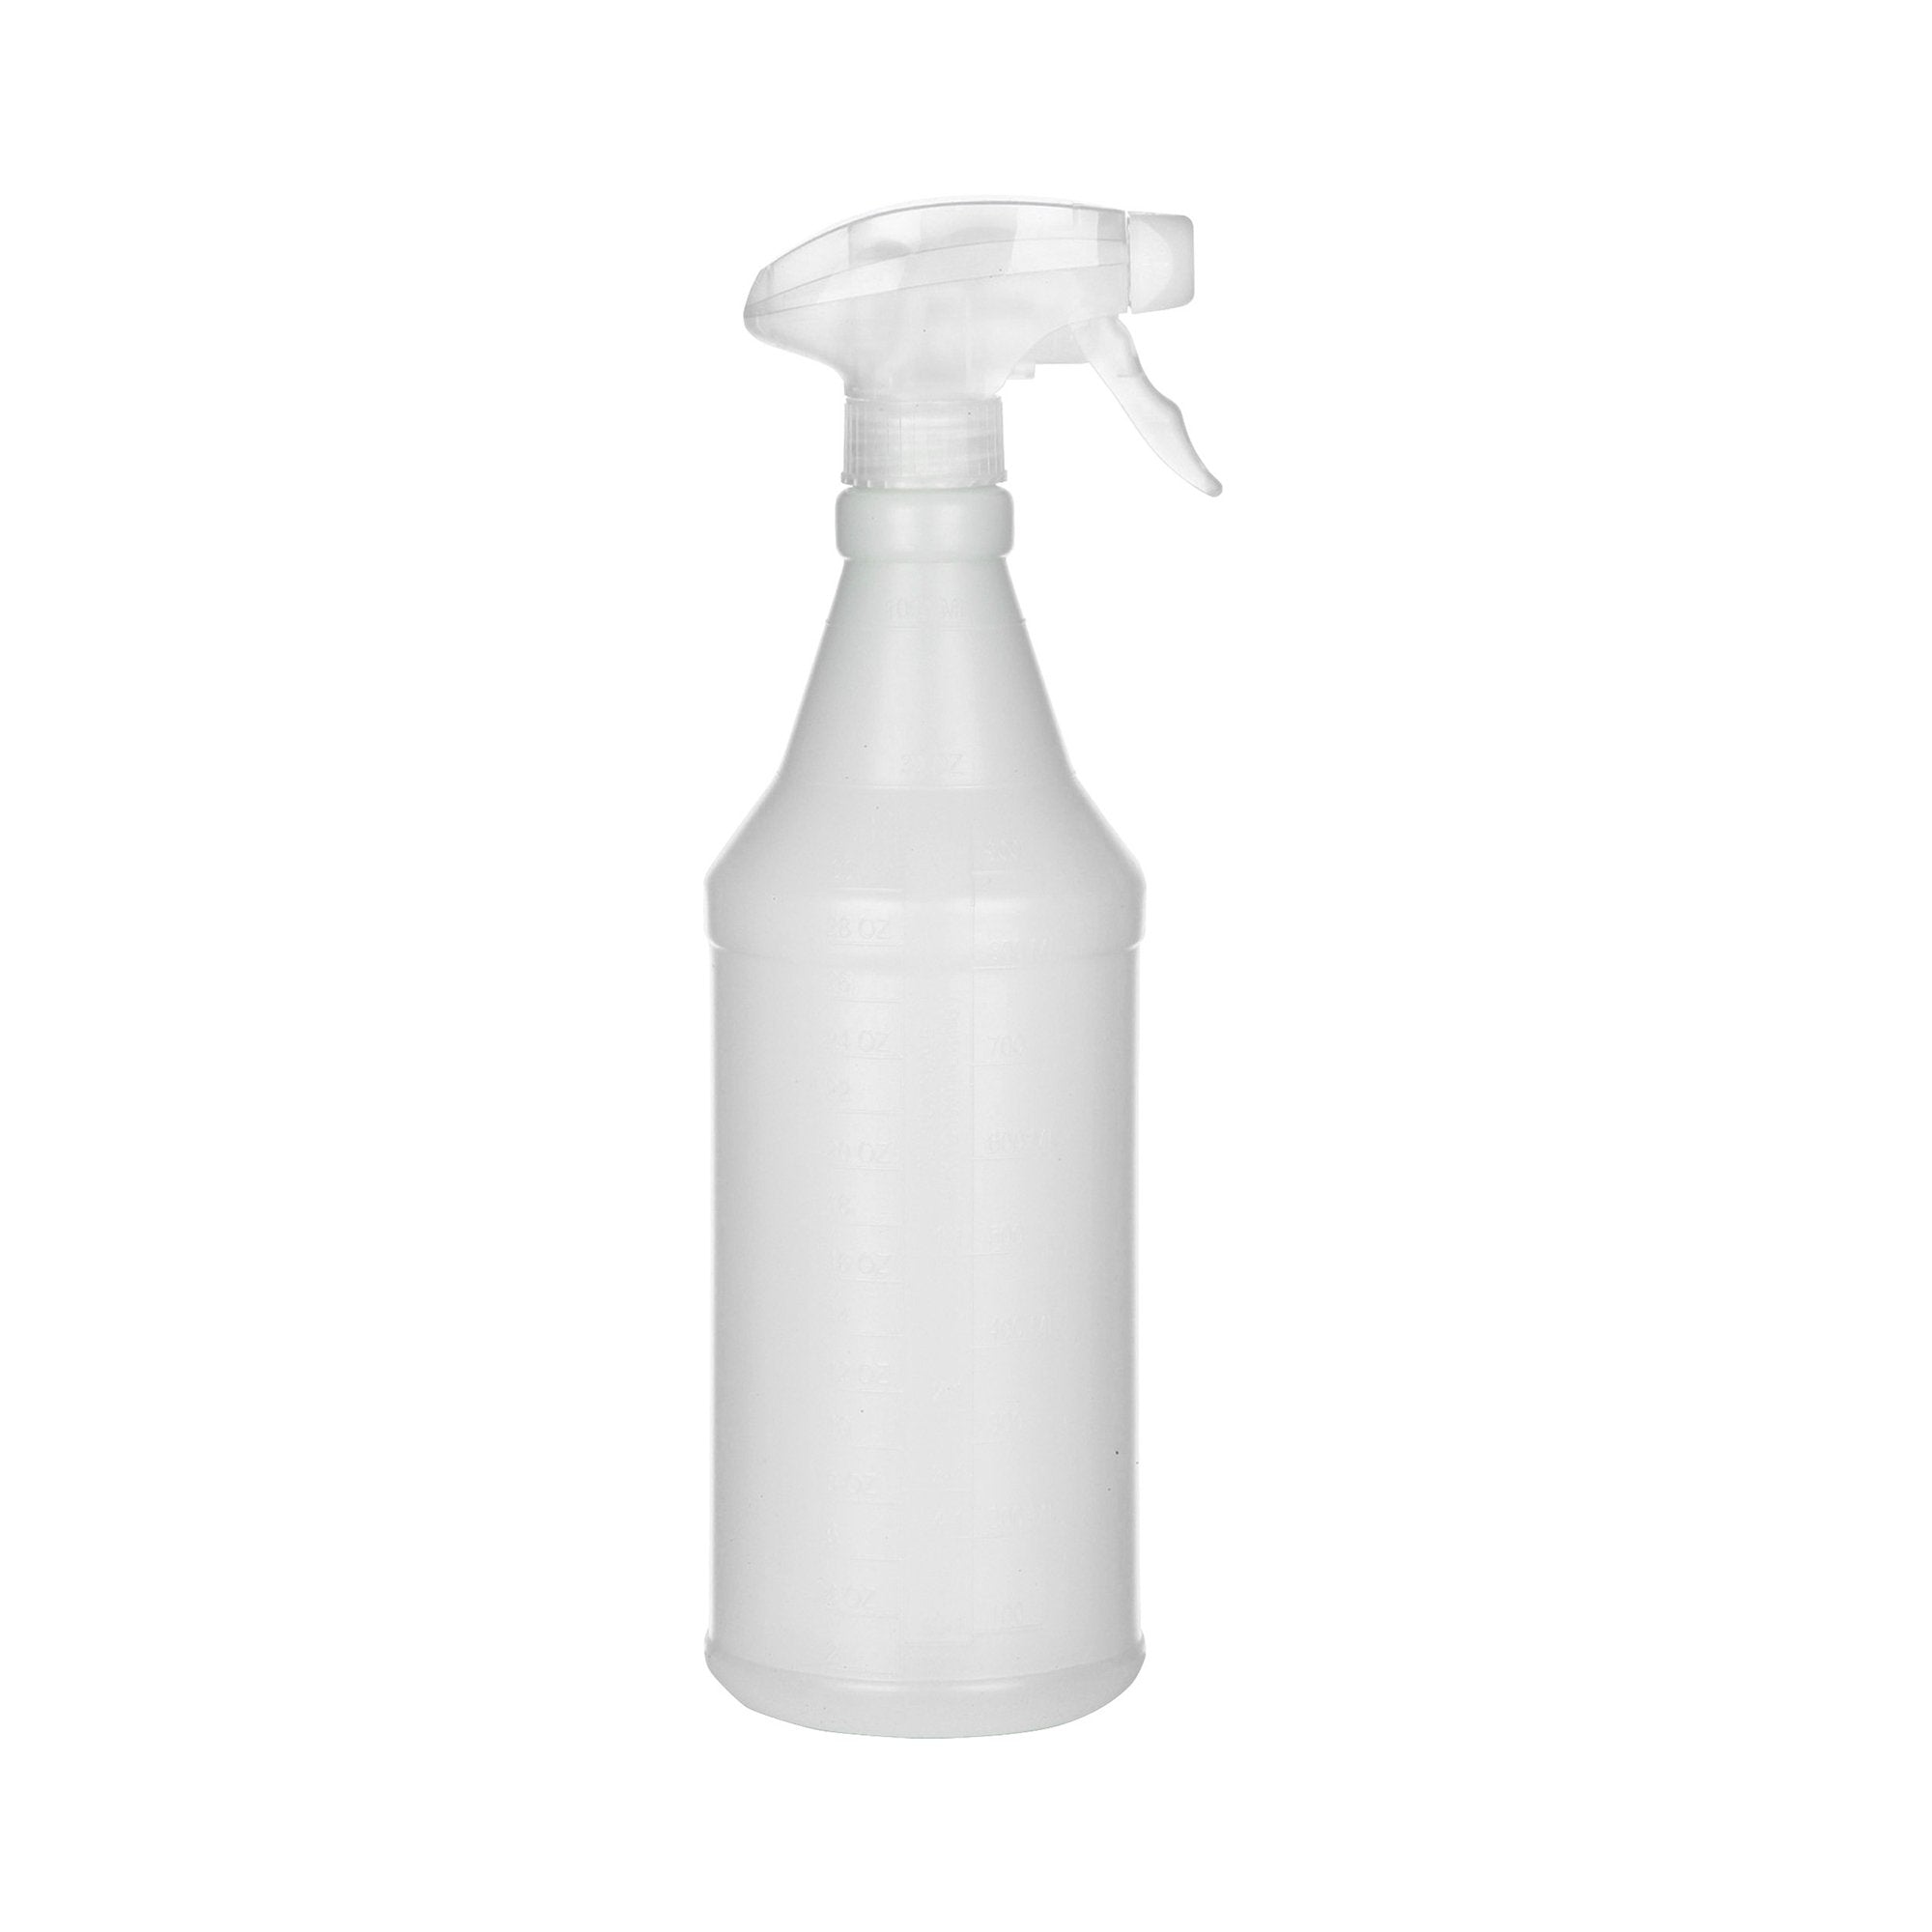 Medical Safety Systems Empty Spray Bottle 16 oz. -Each